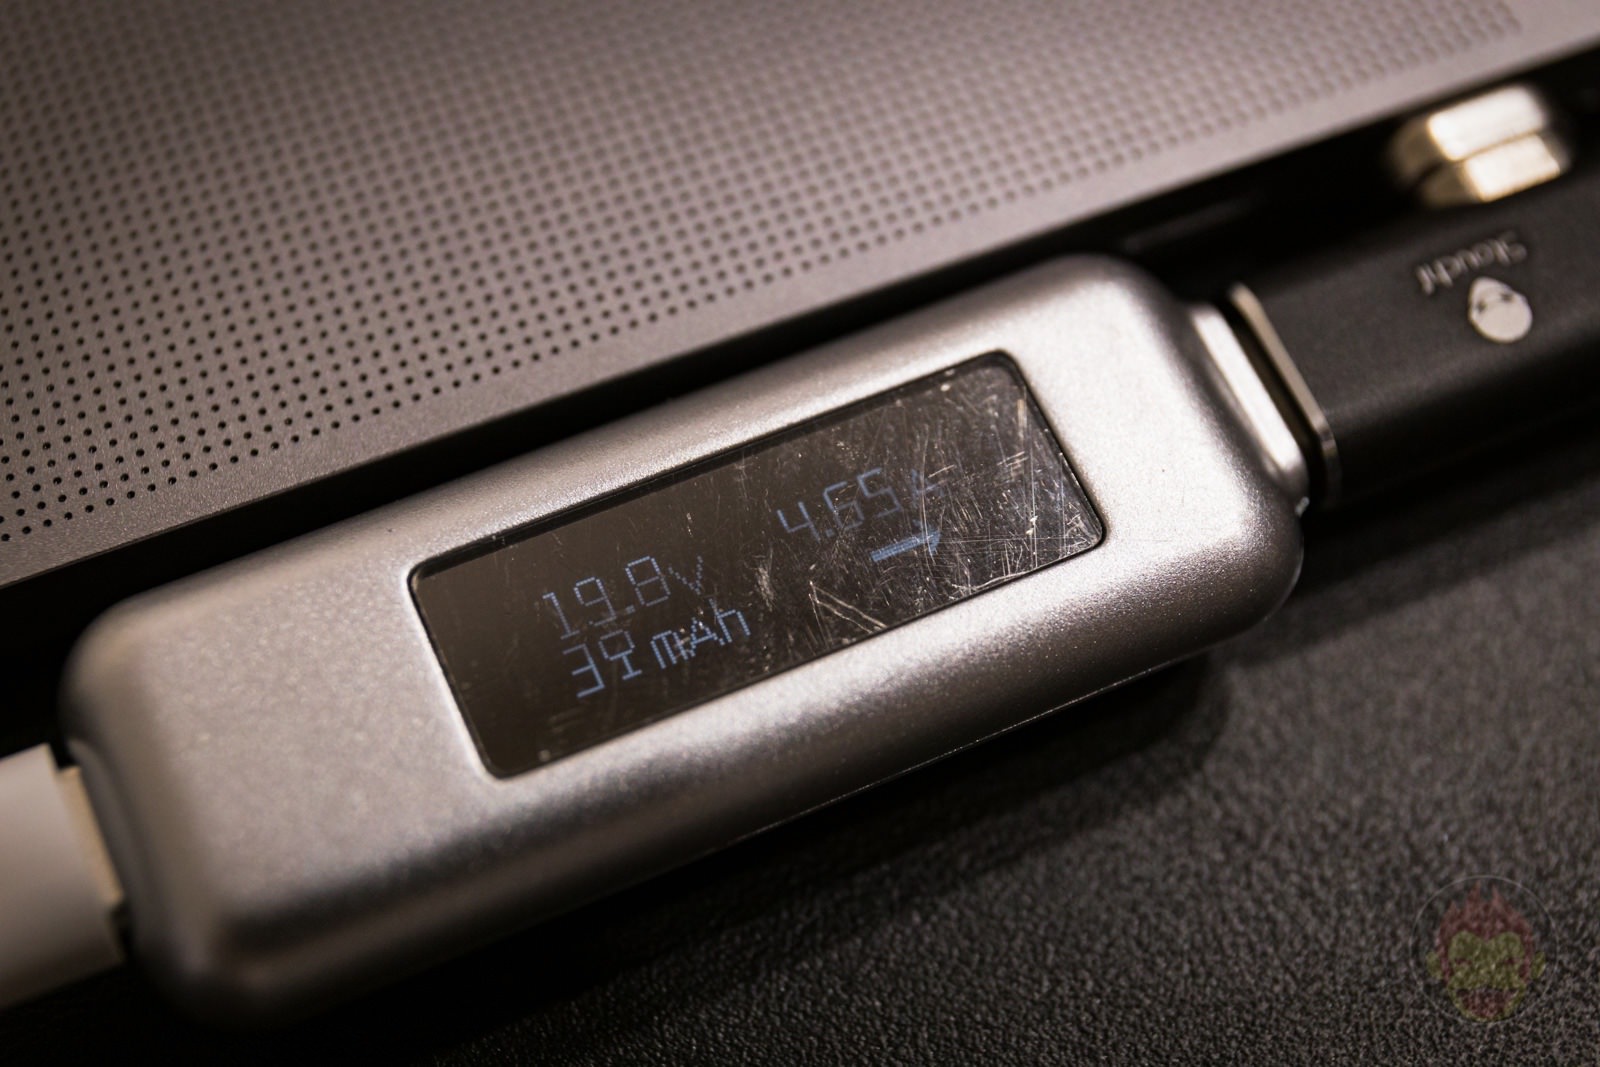 MacBook Pro USB-C charger